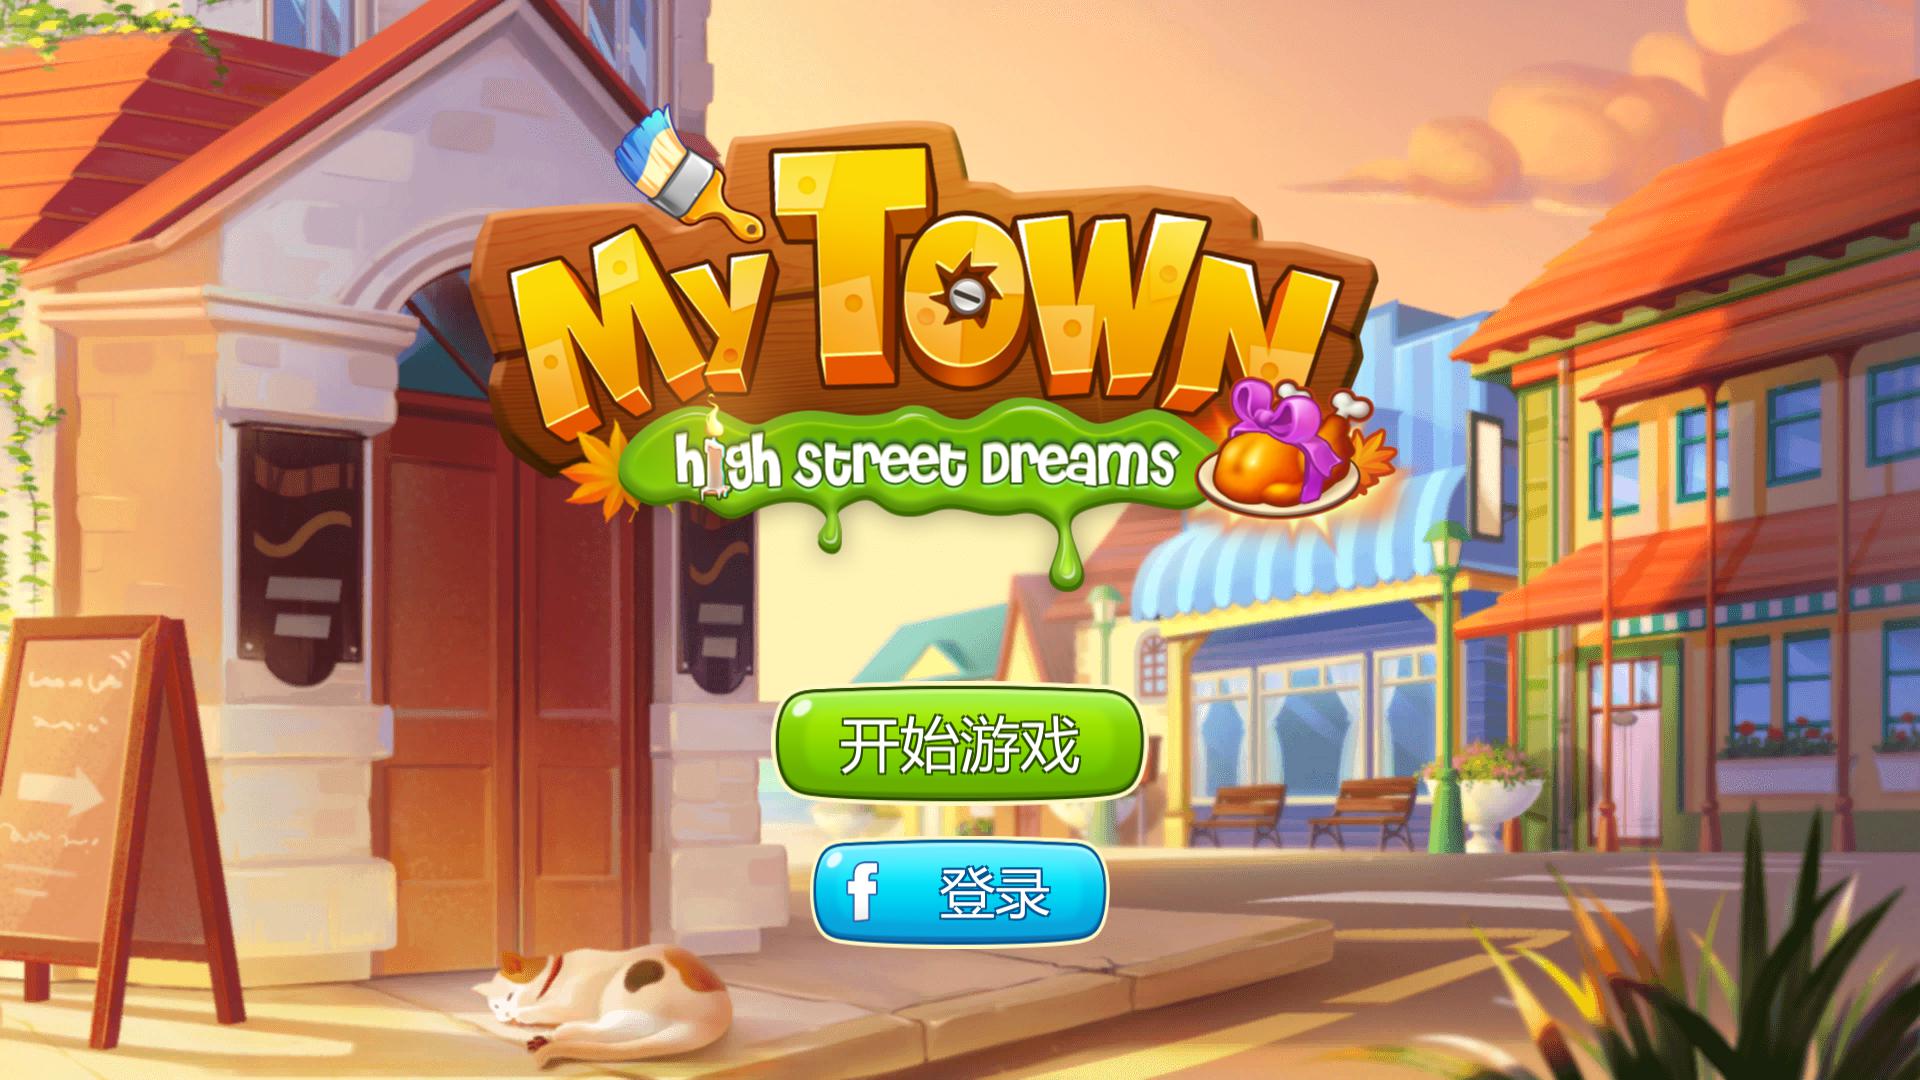 My Town - High Street Dreams